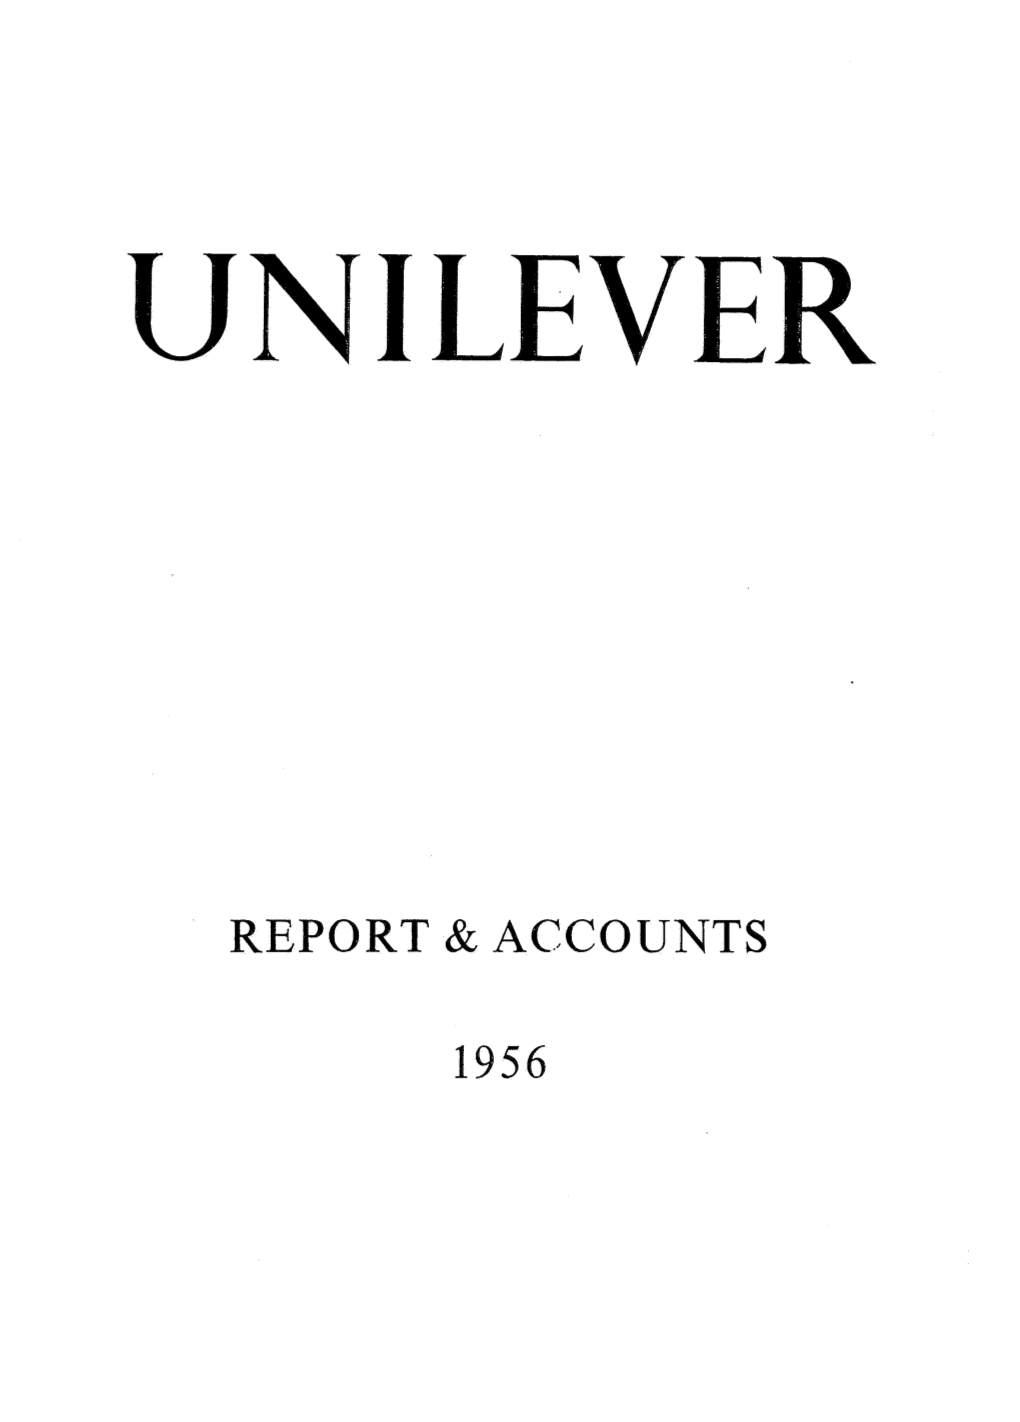 1956 Annual Report